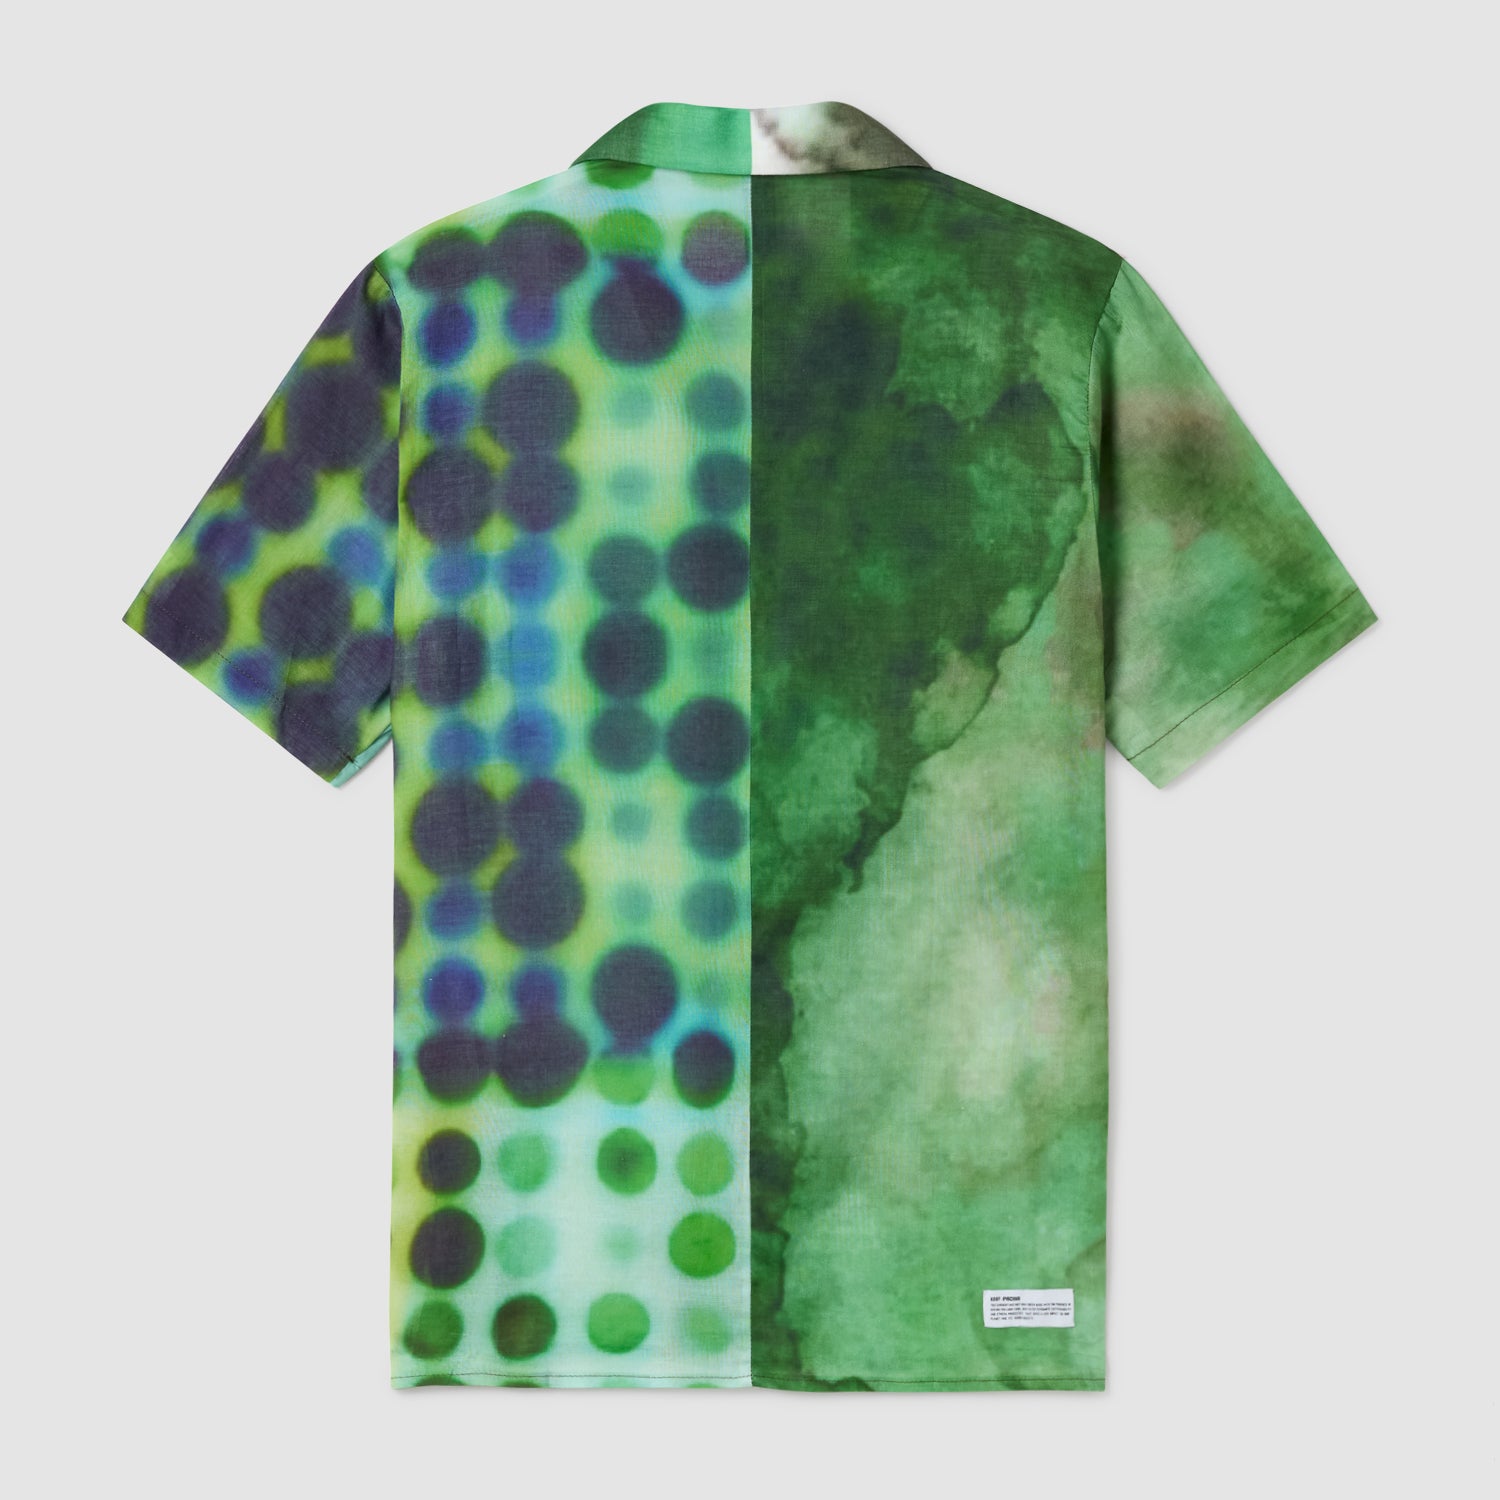 Pacha x KOBF - Camisa Verde Unissex